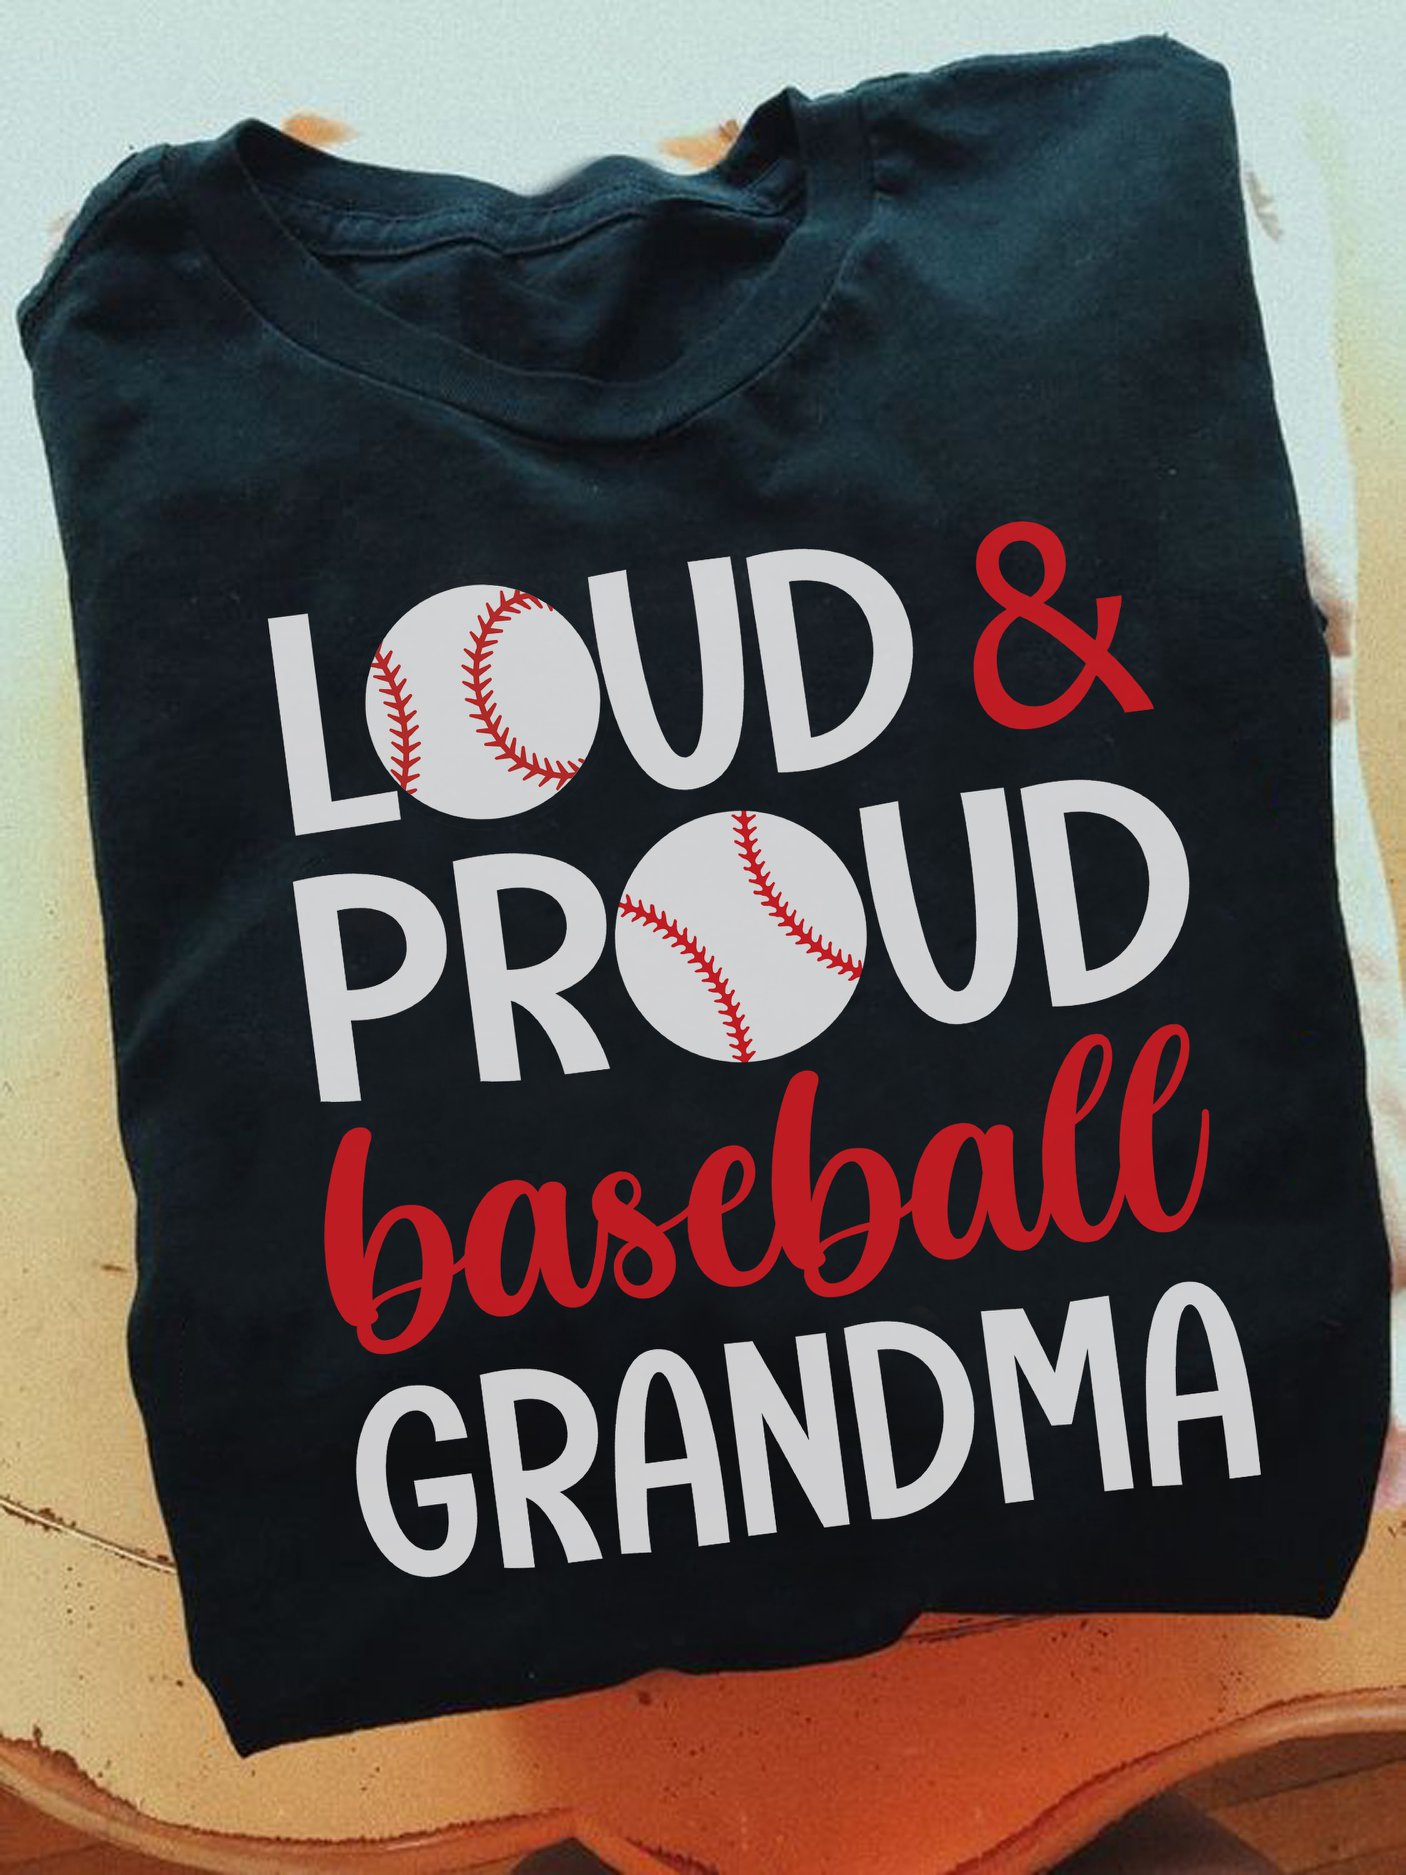 Loud & proud basketball grandma